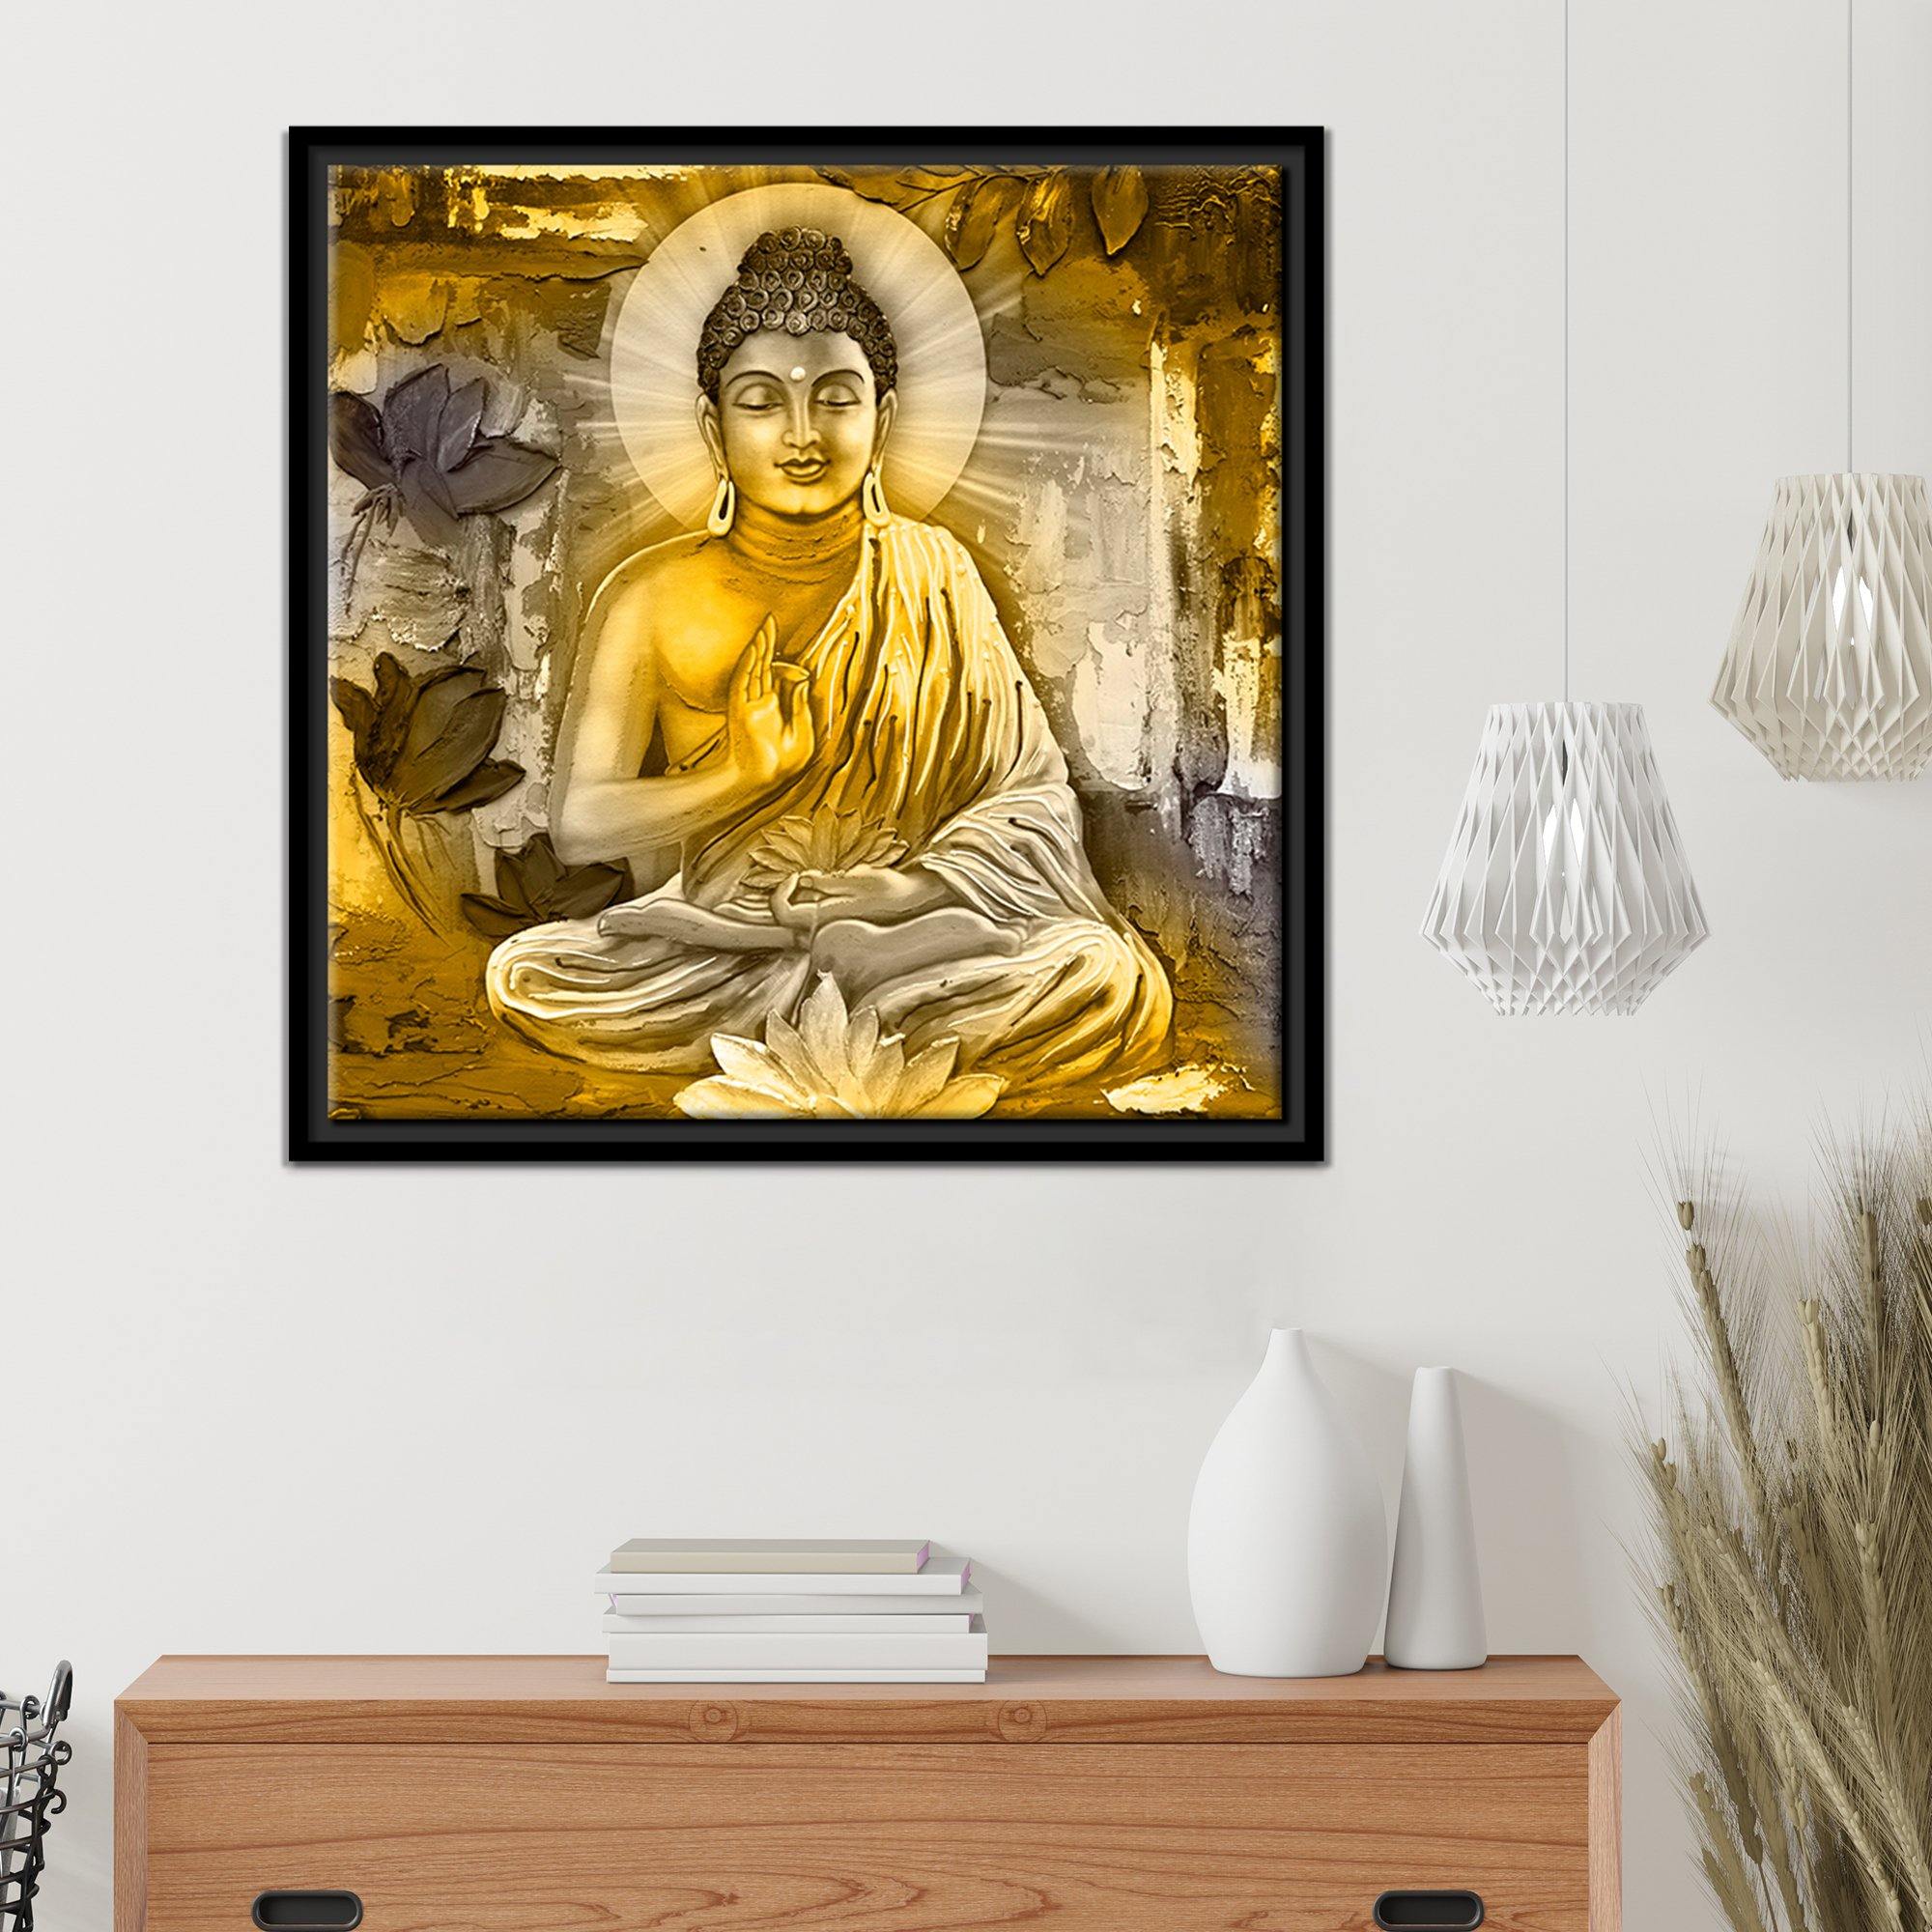 Gautam Buddha Floating Canvas Religious Wall Painting Frame